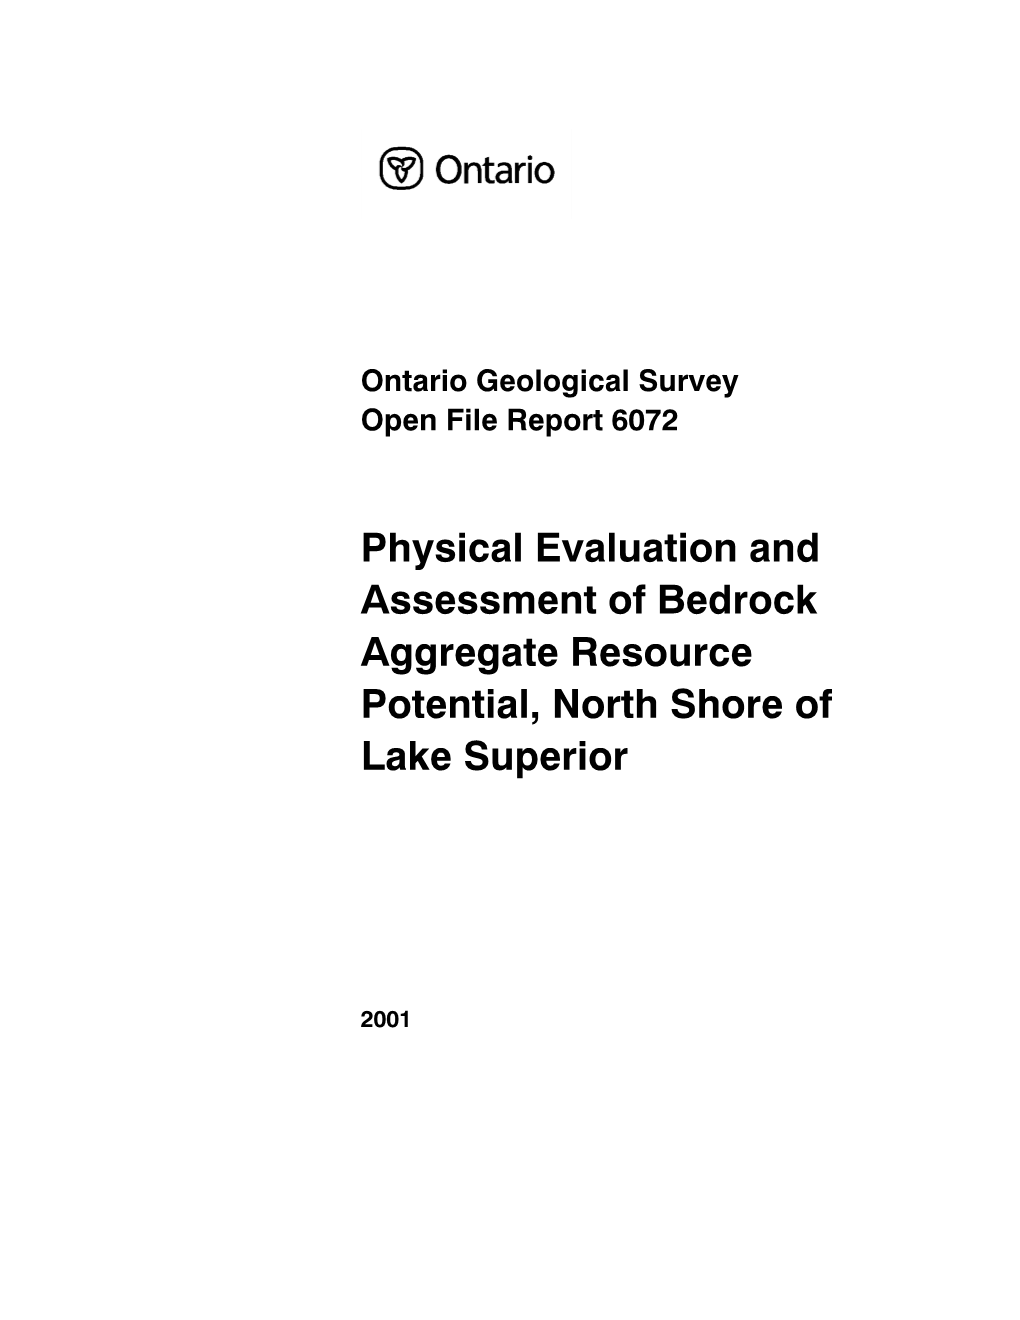 Physical, Assessment, Bedrock, Aggregate, Lake Superior